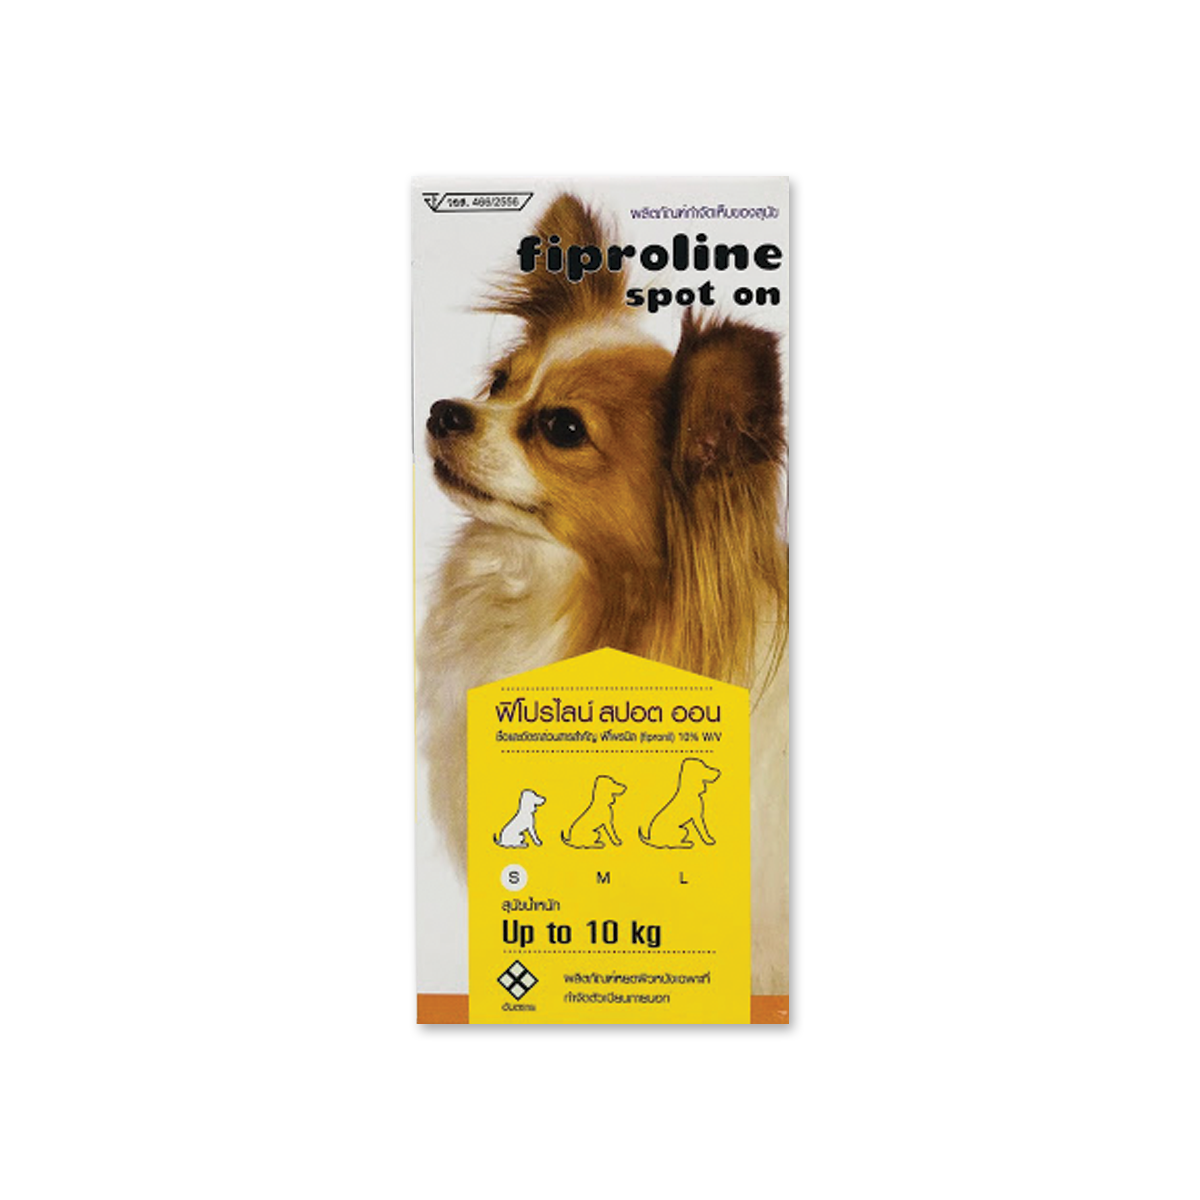 Fiproline Spot On Dog tick flea ฟิโปรไลน์ สปอต ออน ยาหยอดกำจัดเห็บหมัด สำหรับสุนัข 1-10 กก.